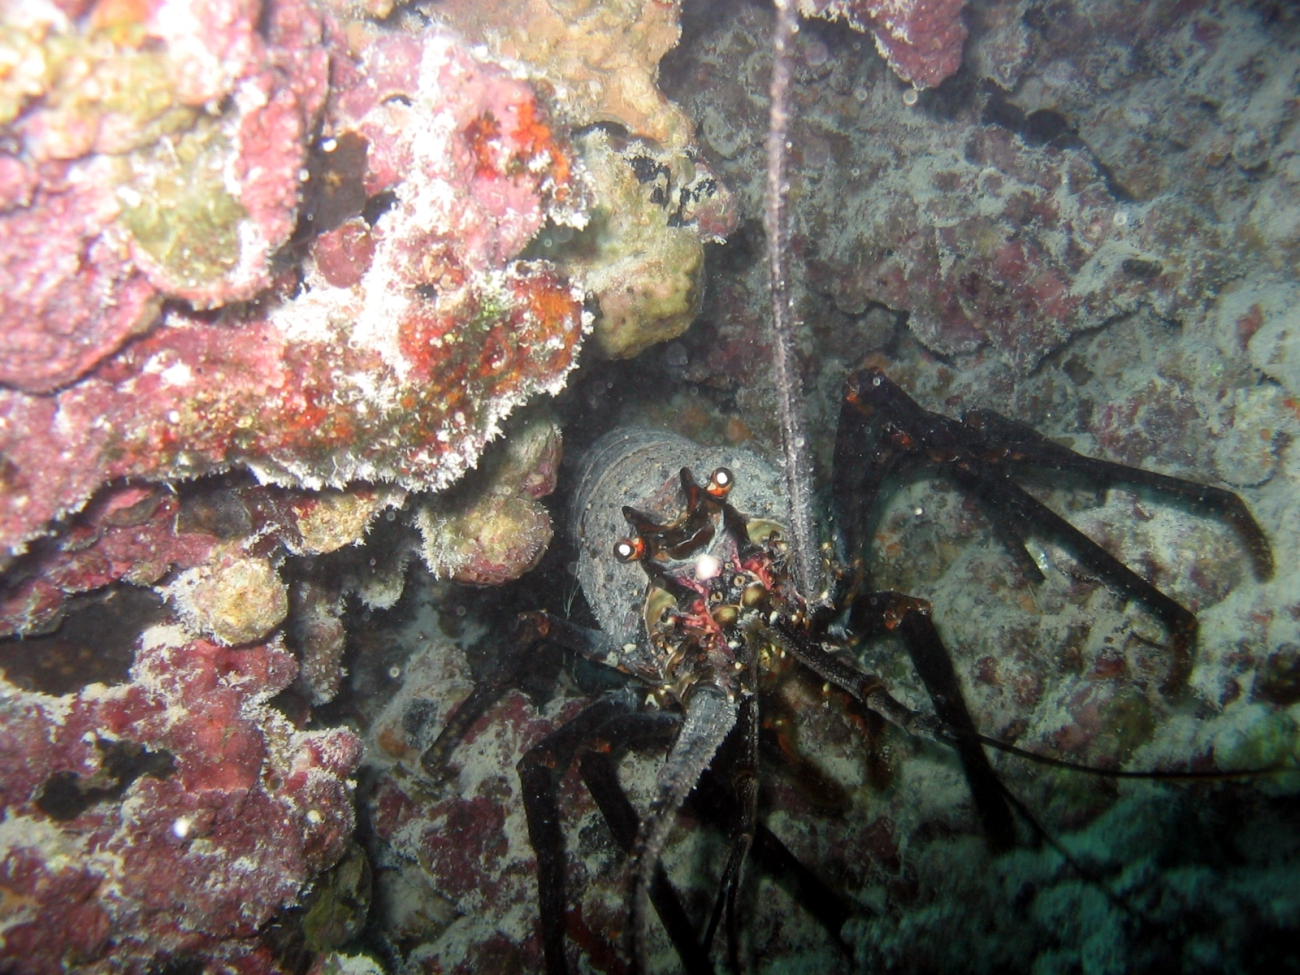 Spiny lobster (Panilurus sp